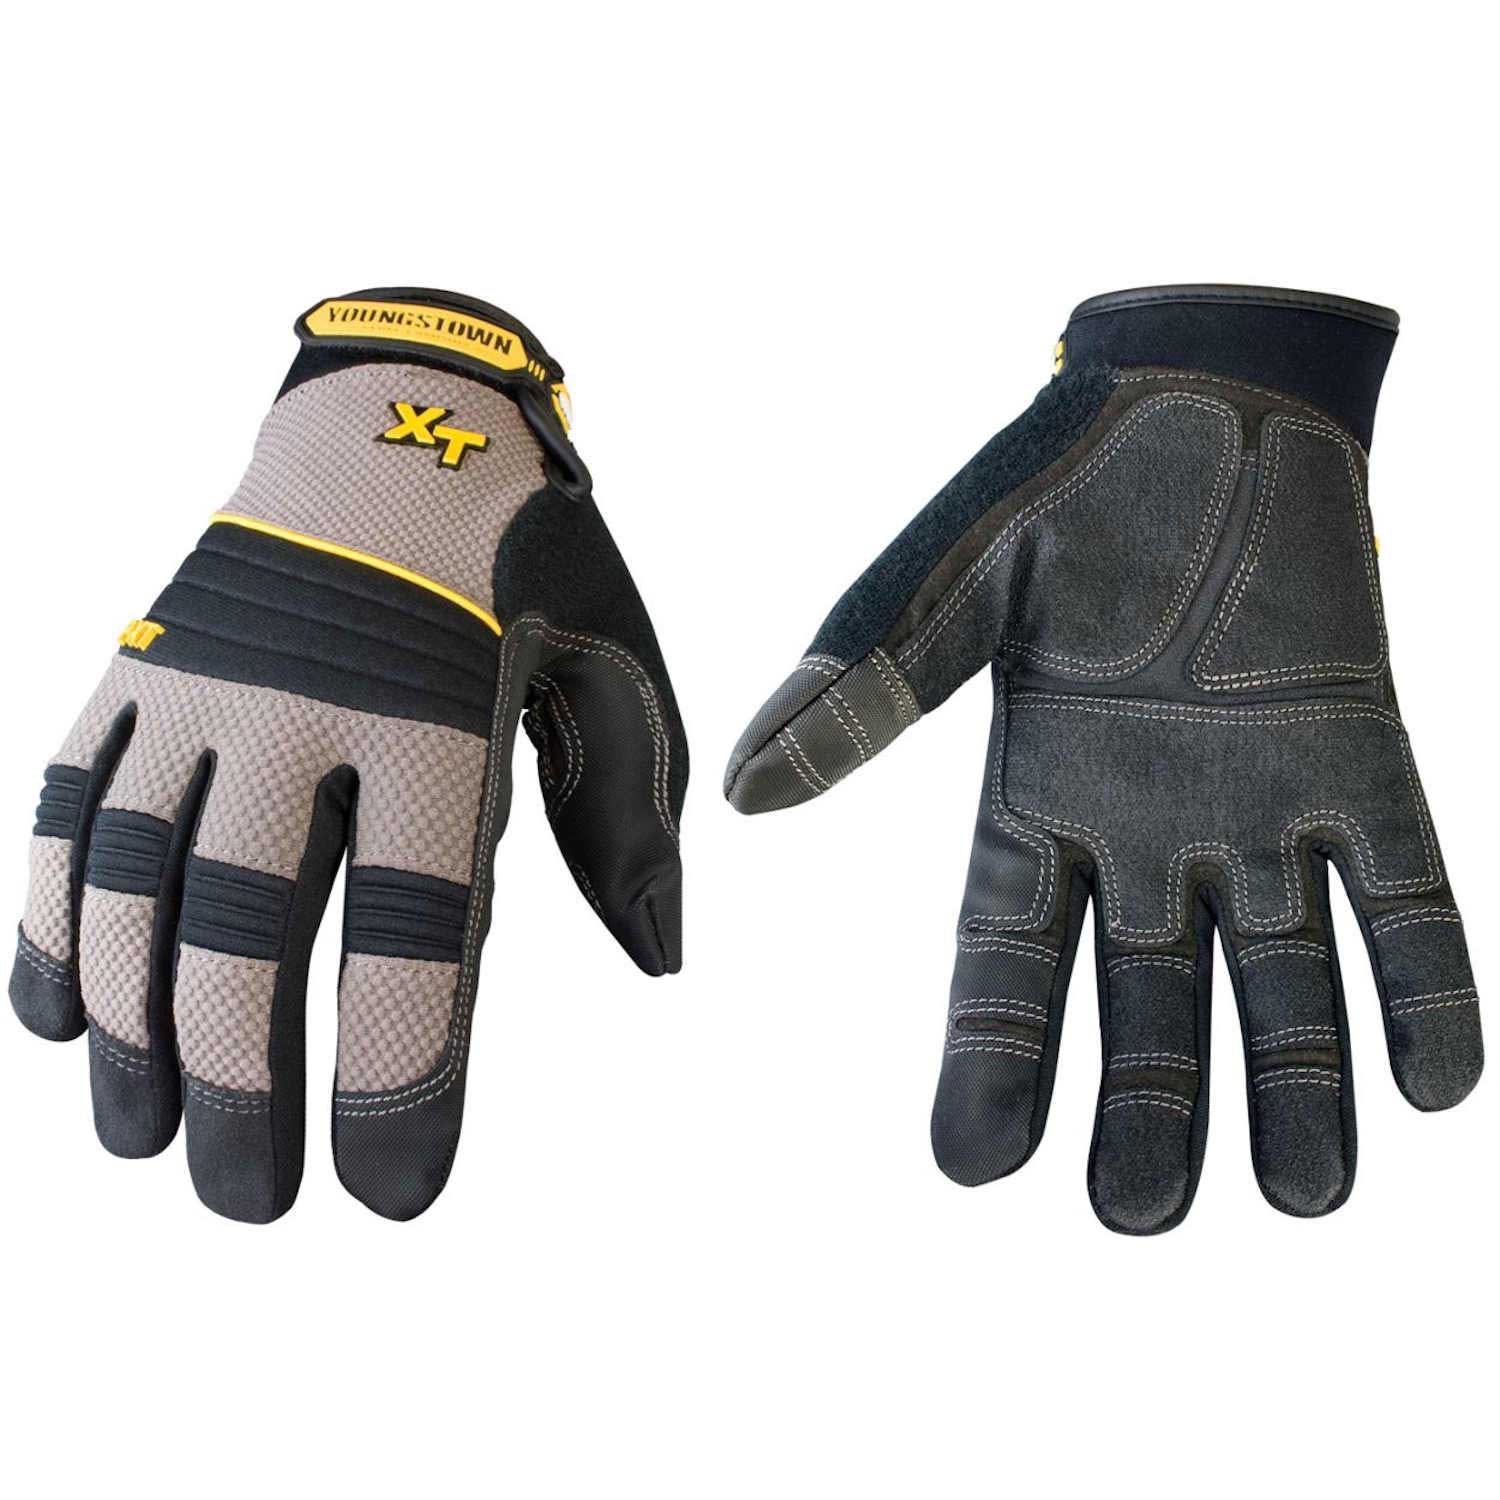 Youngstown Glove Pro XT Glove